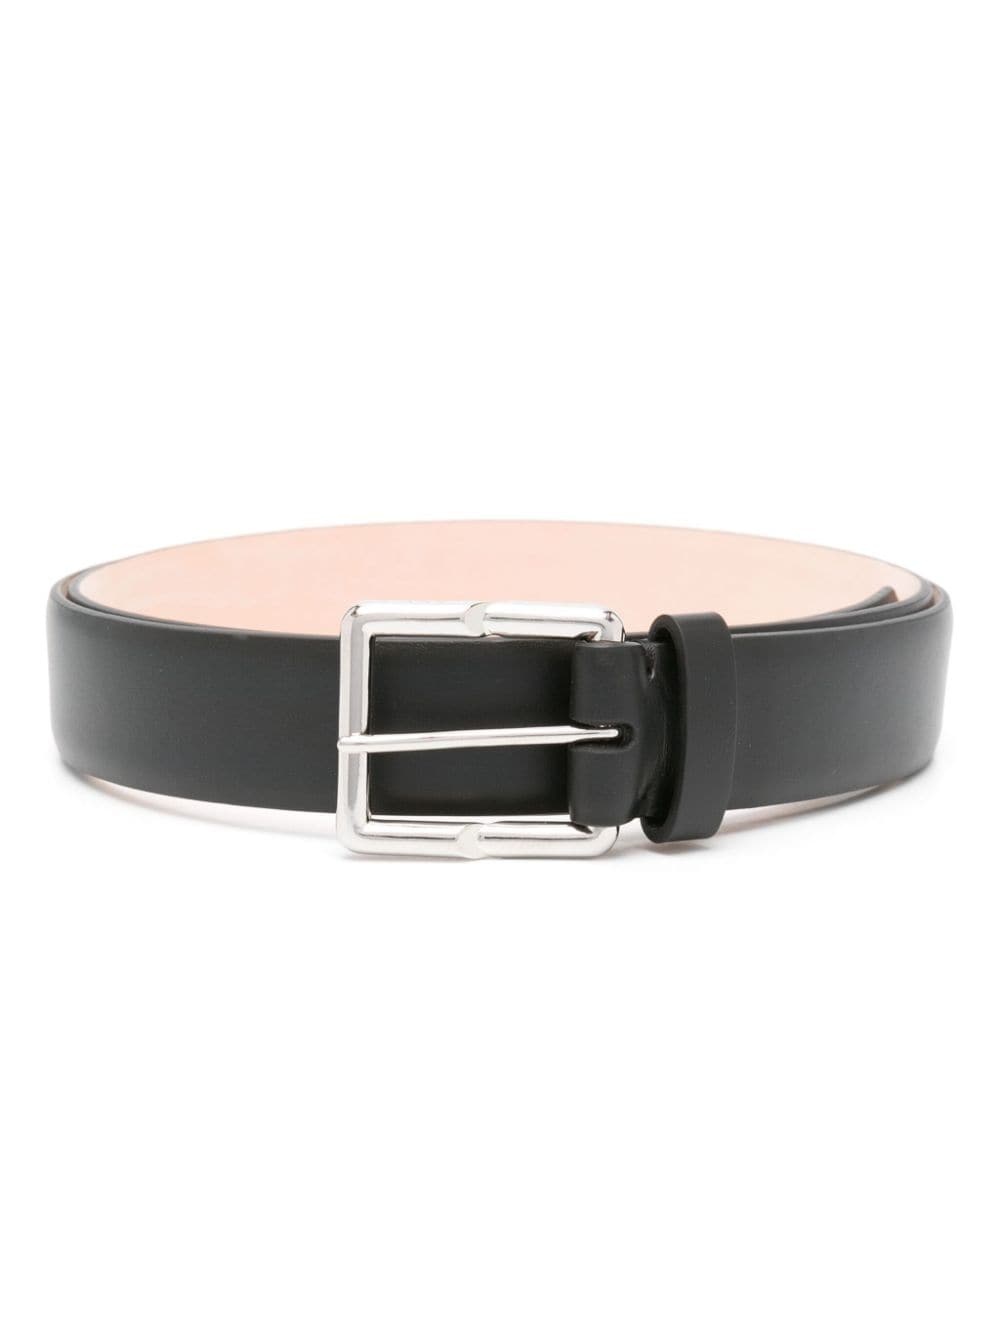 engraved-buckle leather belt - 1